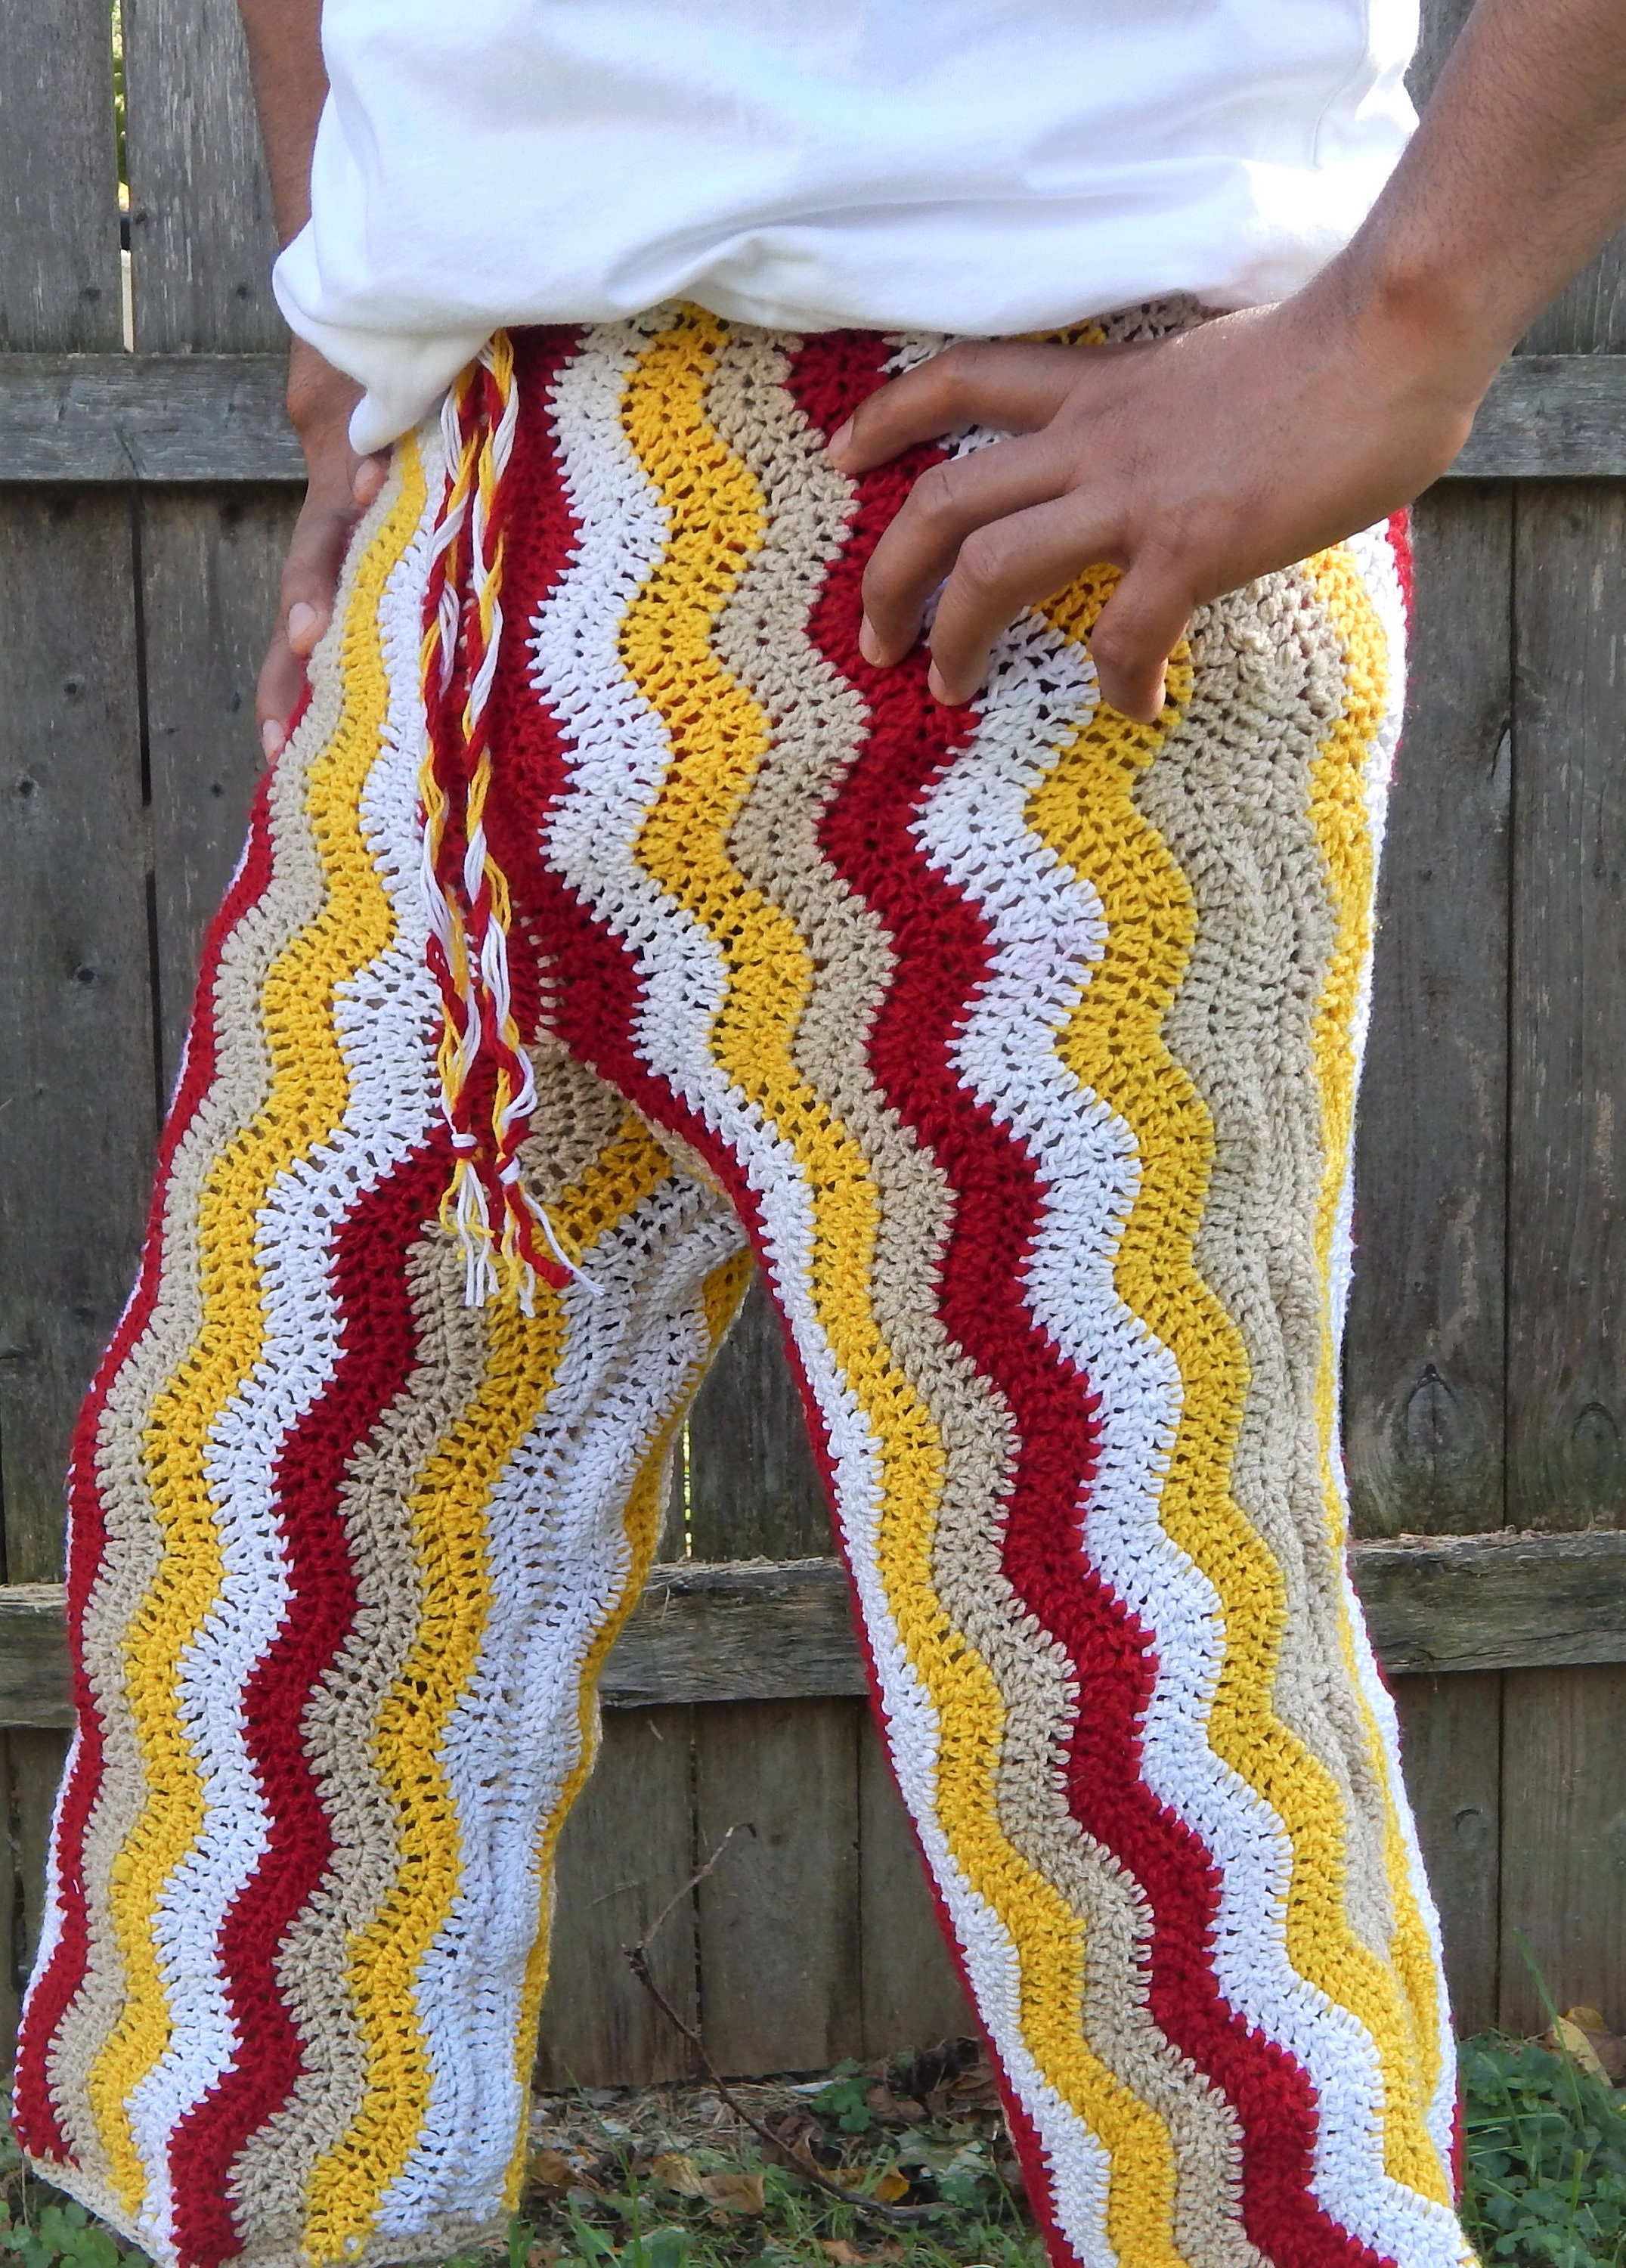 yellow crochet shorts